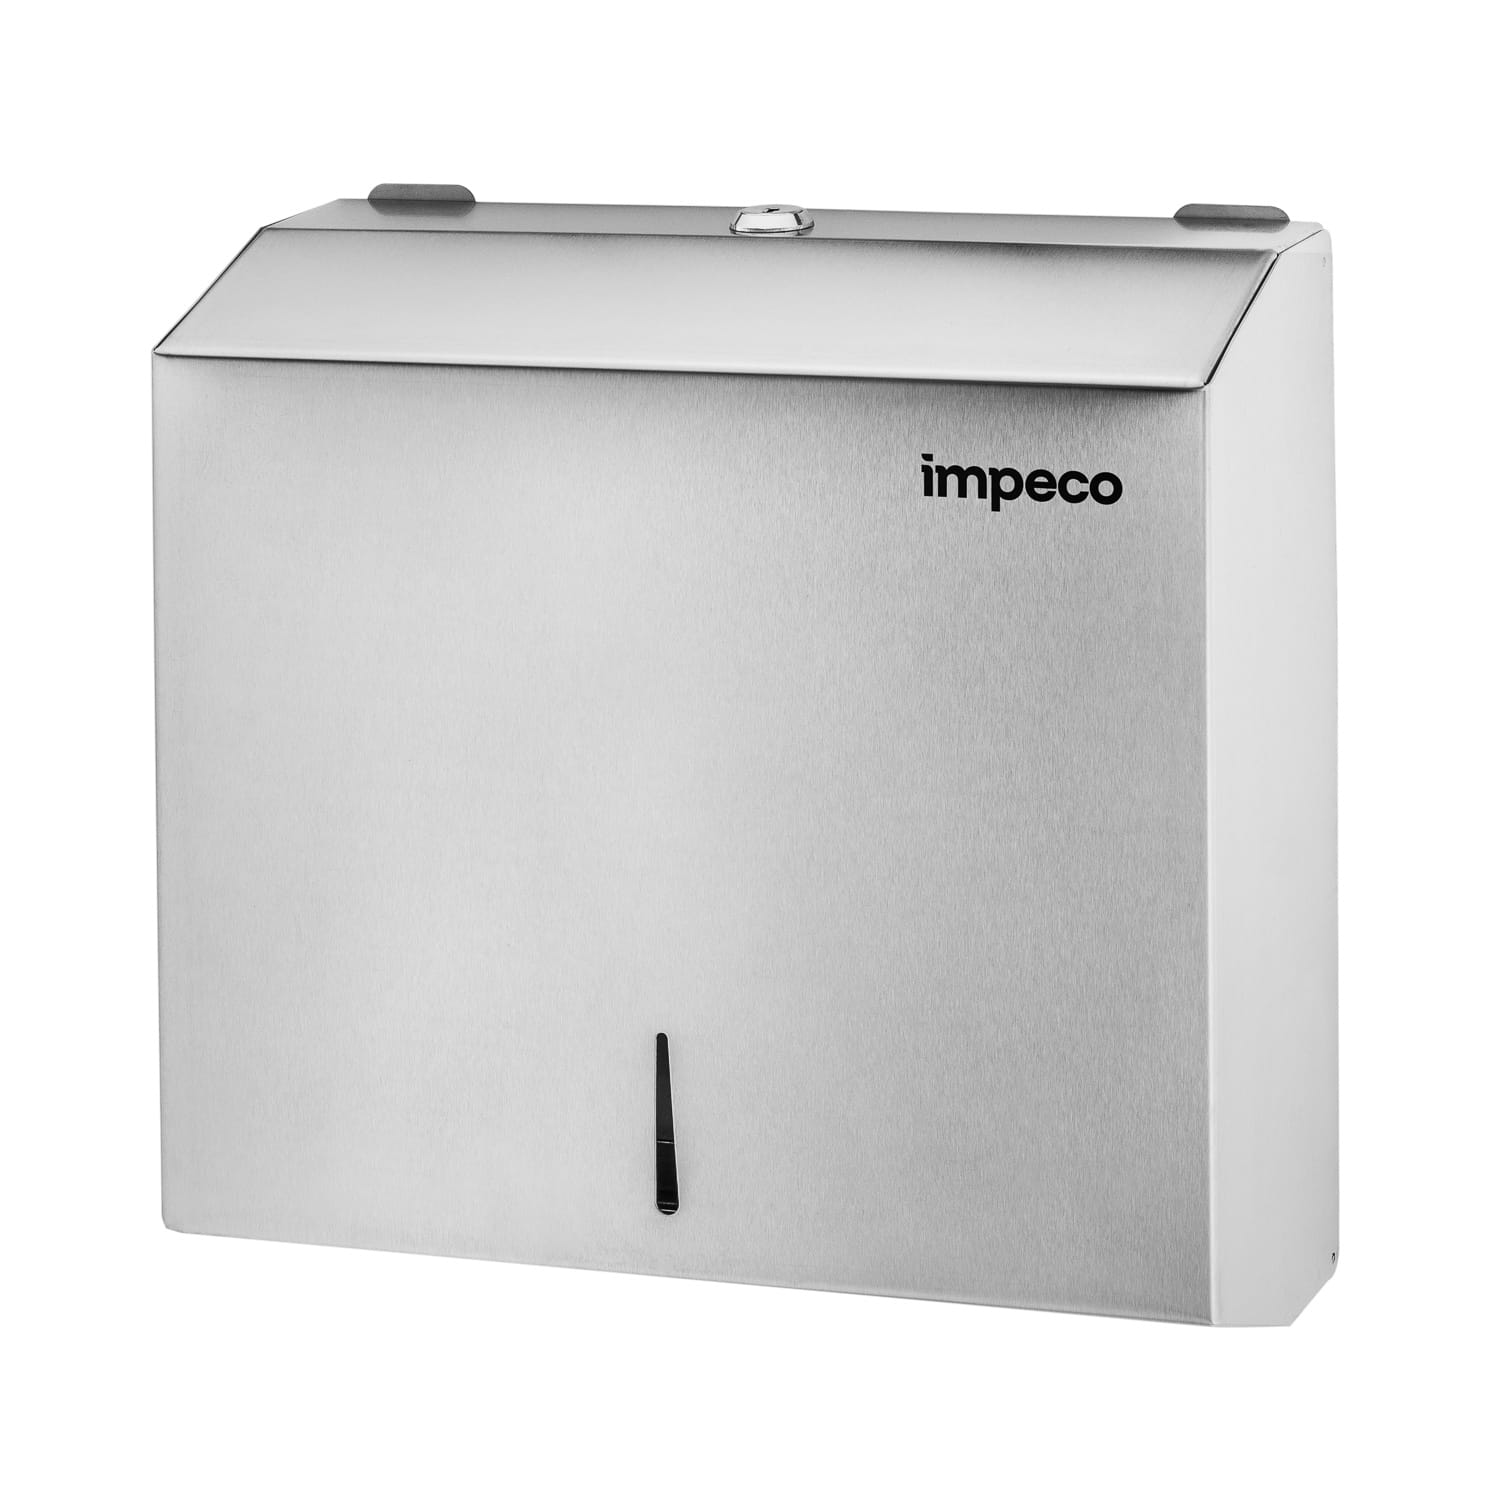 Paper towel dispenser Mini, Impeco - stainless steel